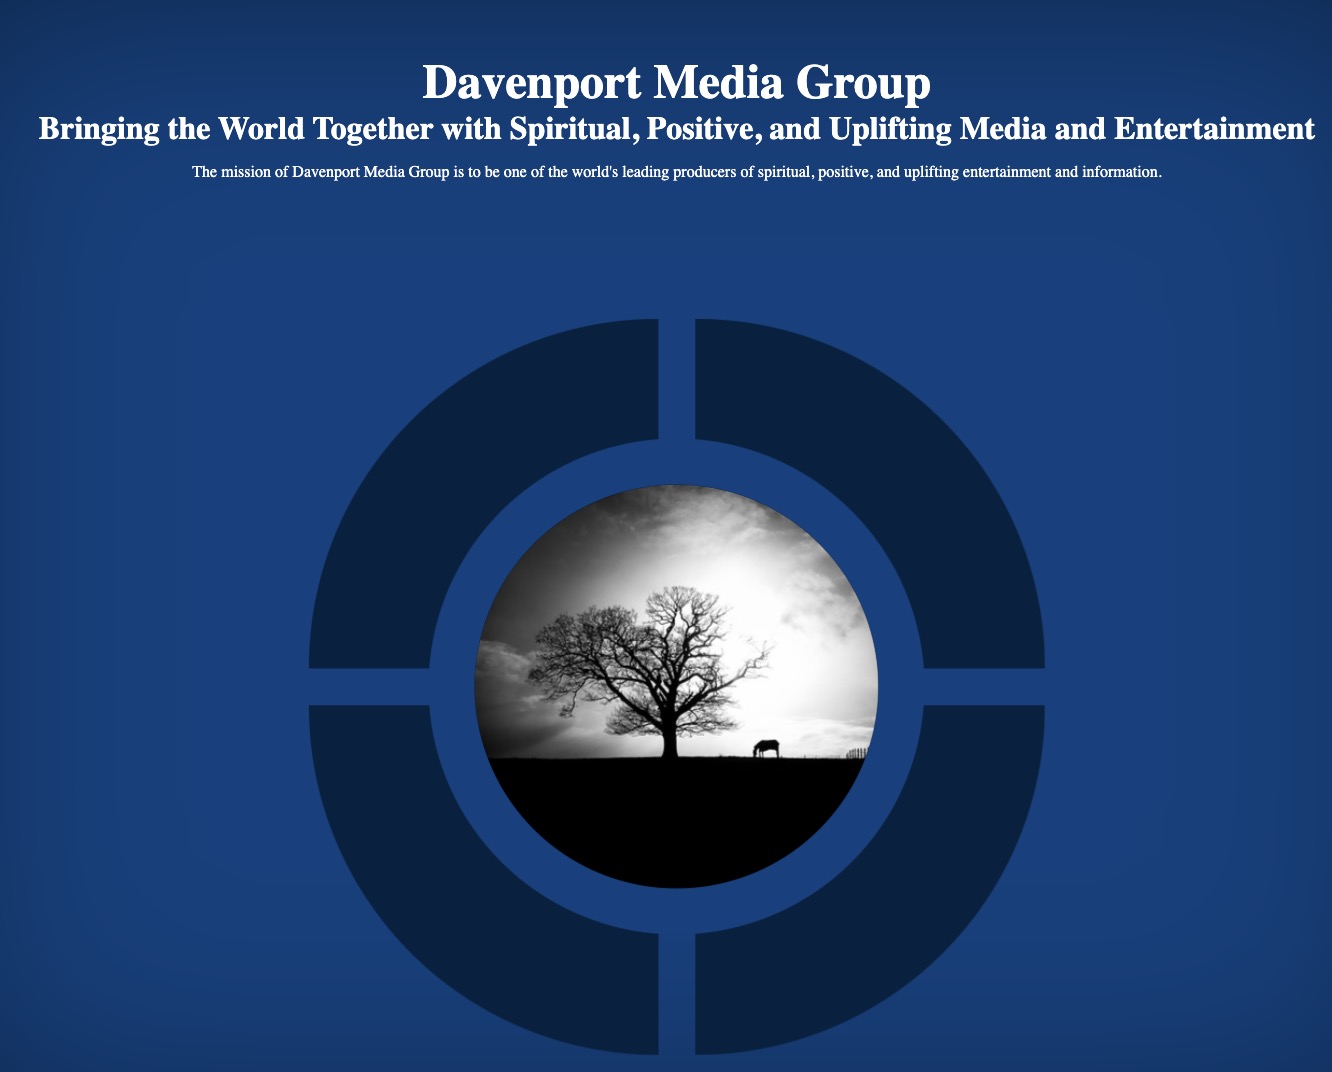 Davenport Media Group website.